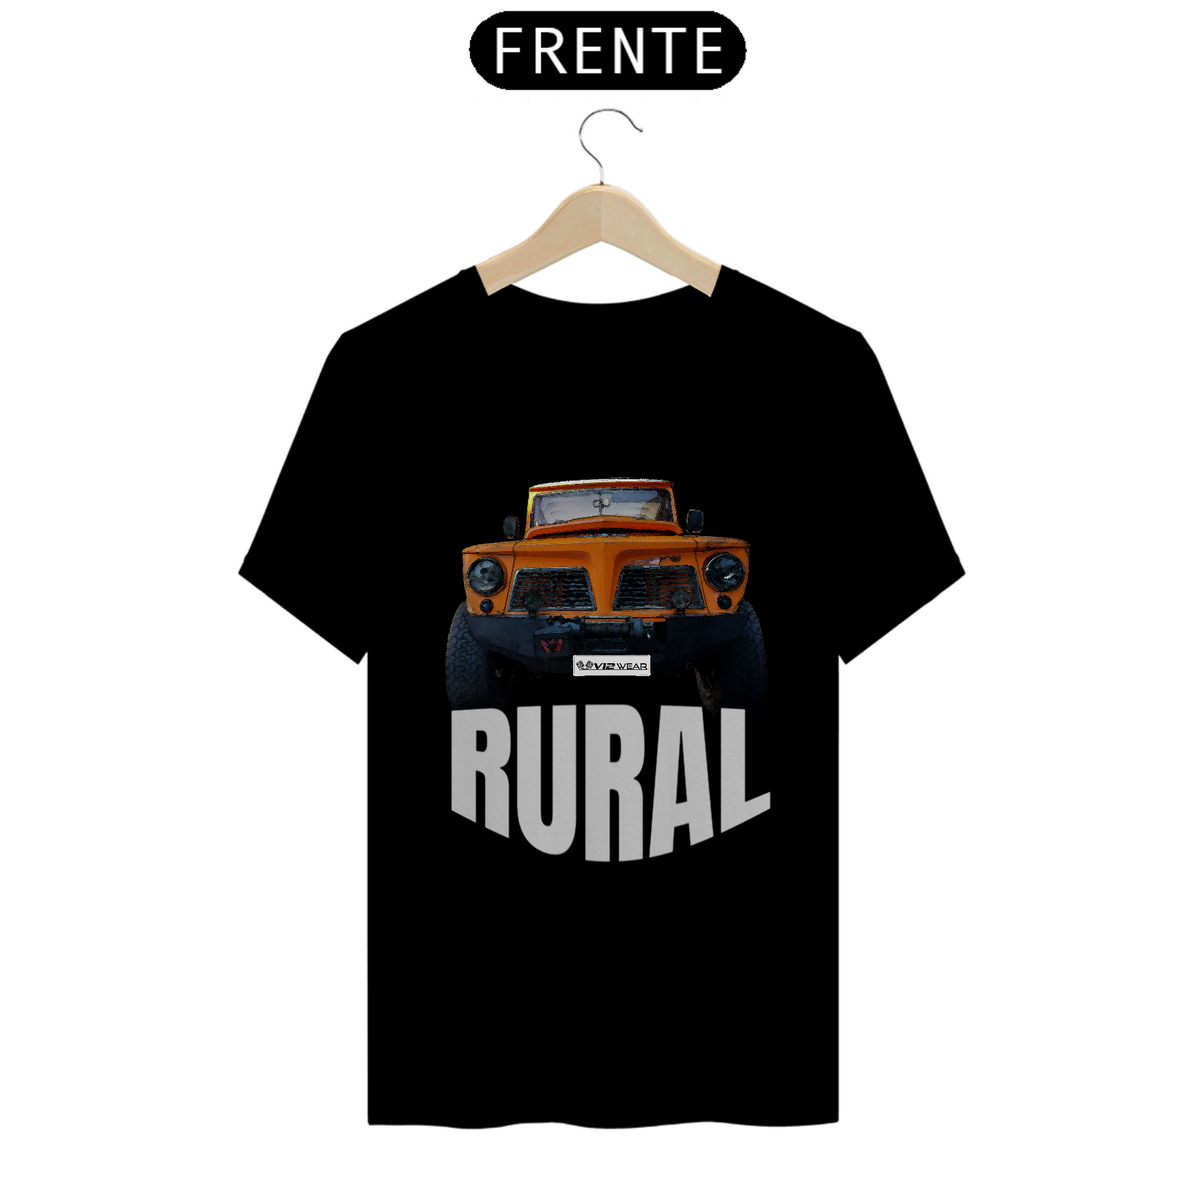 Nome do produto: Camionete Rural